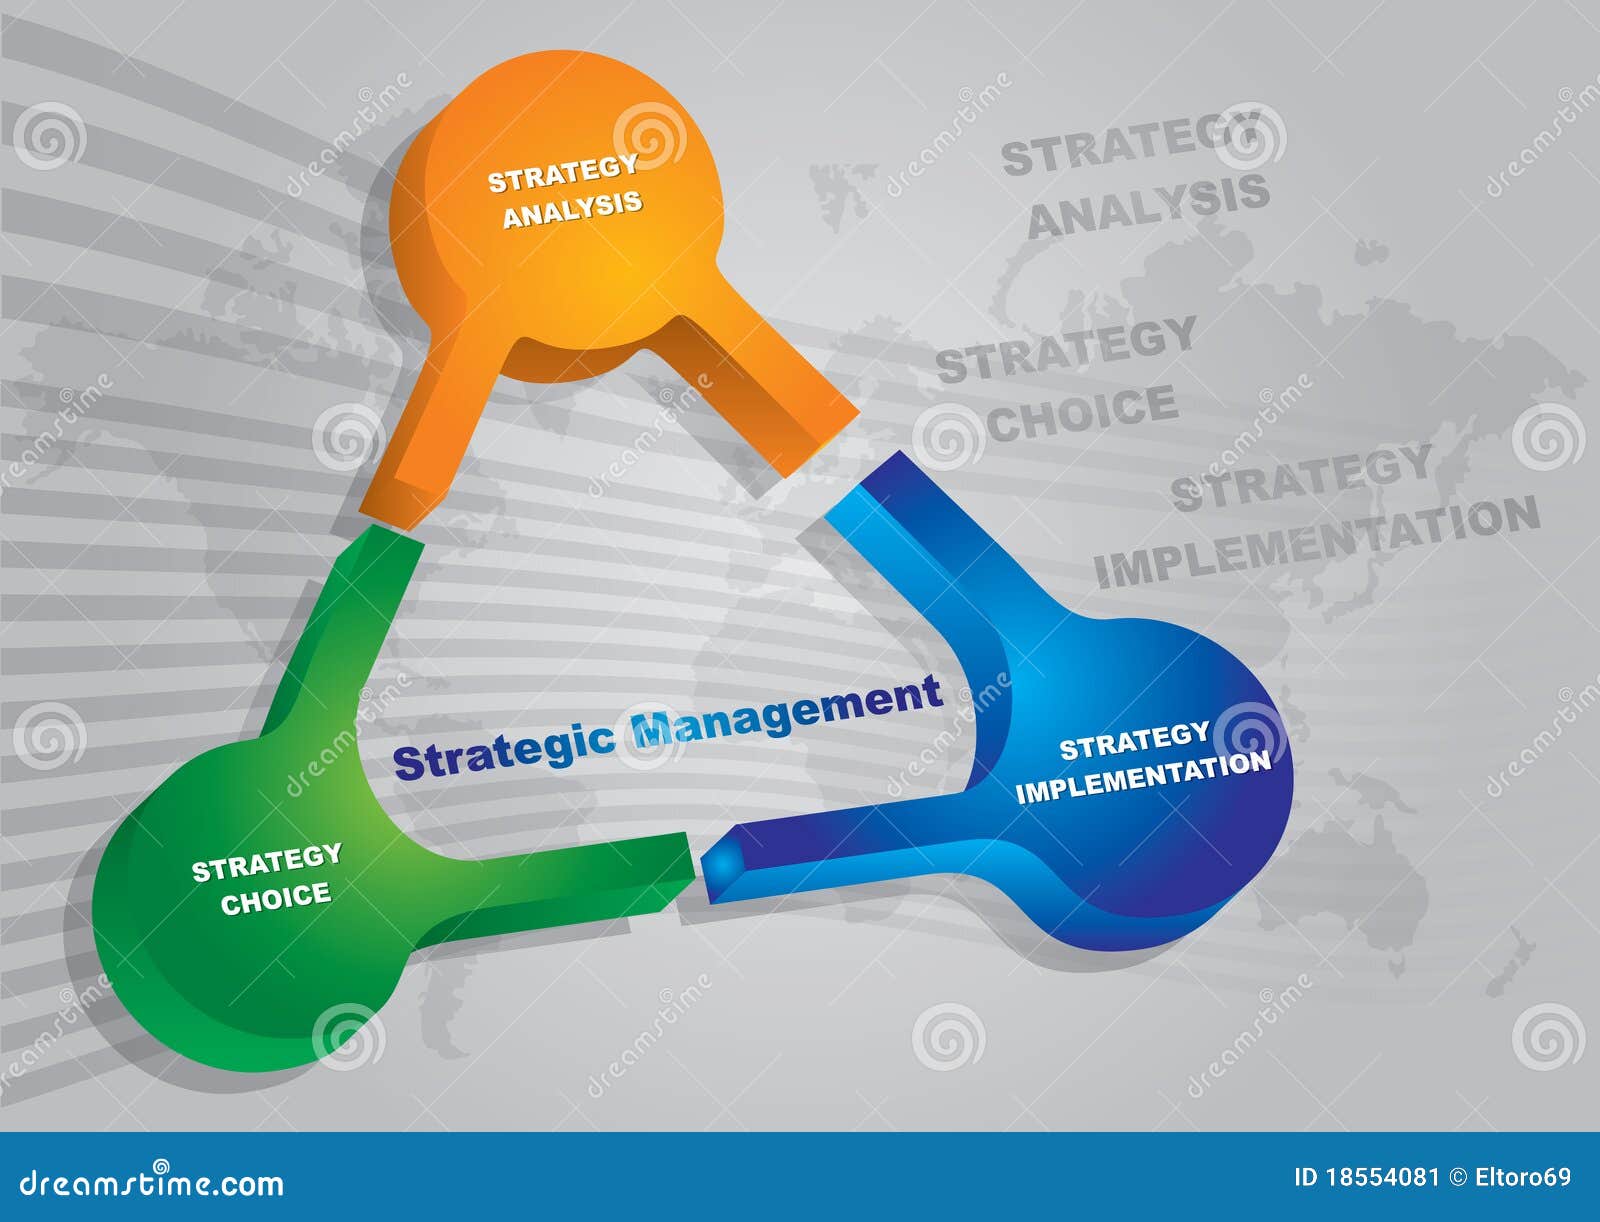 strategic management keys